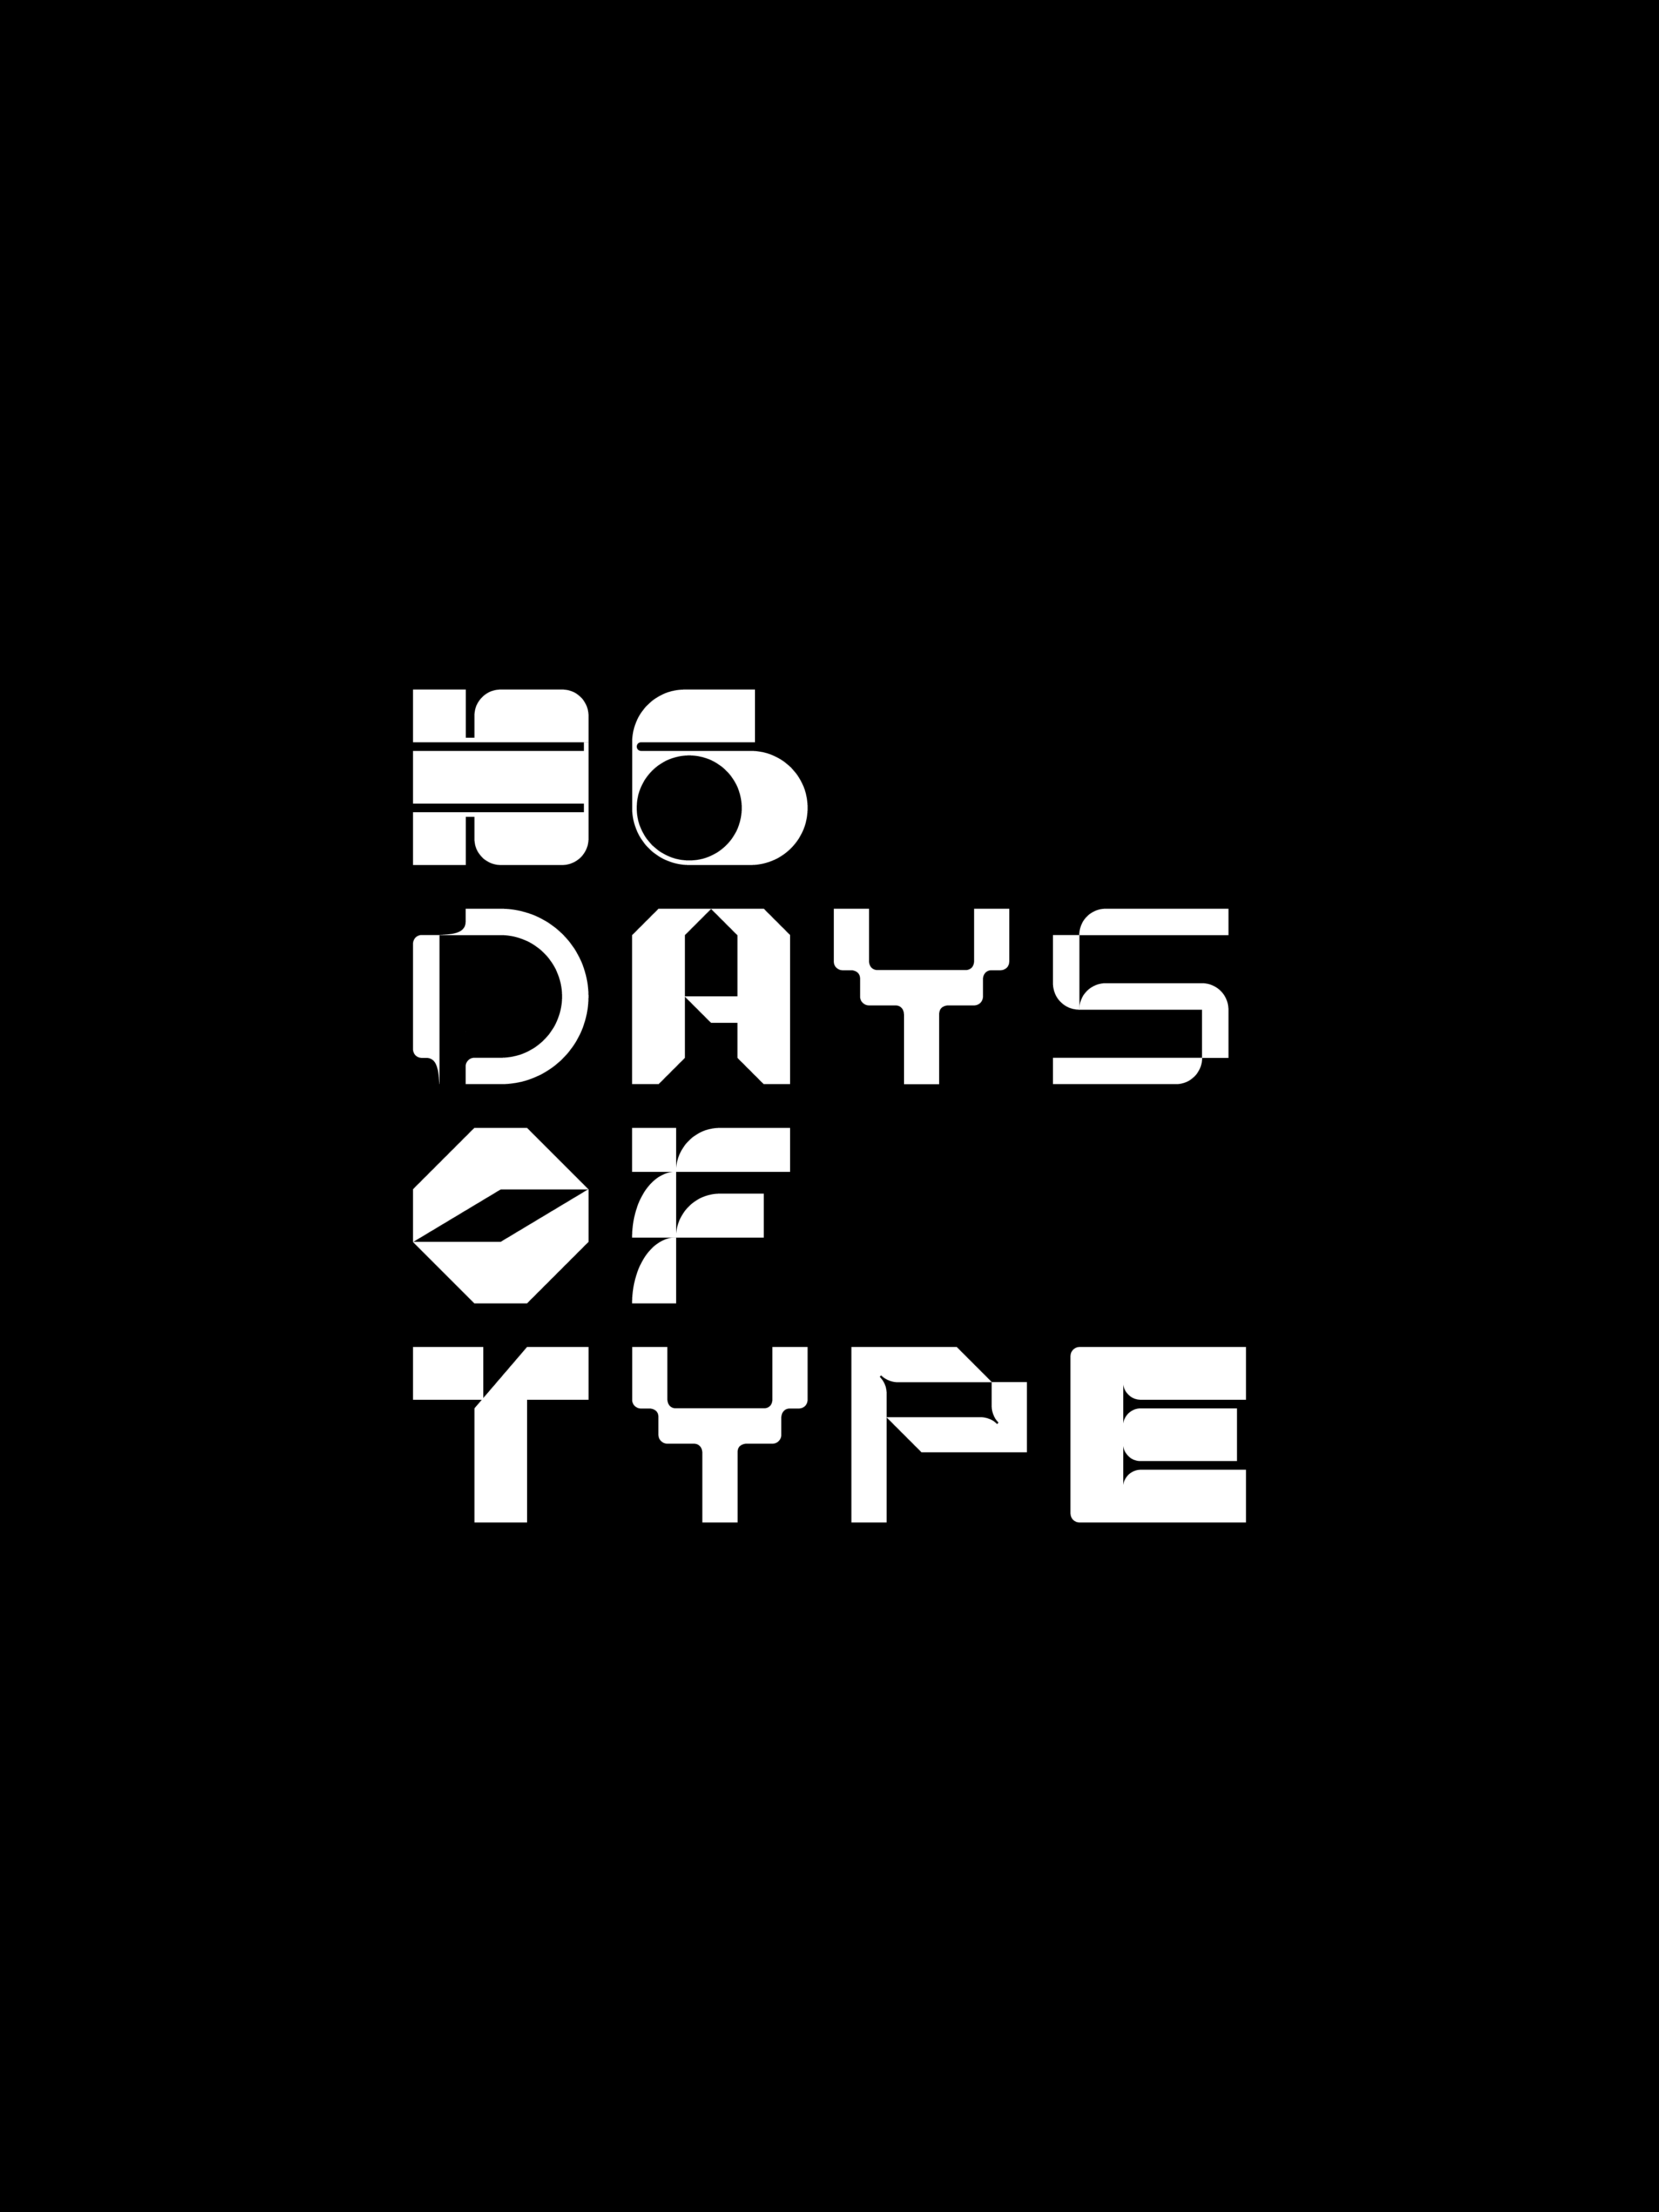 36 Days of Type, 36 Days of Type 2022